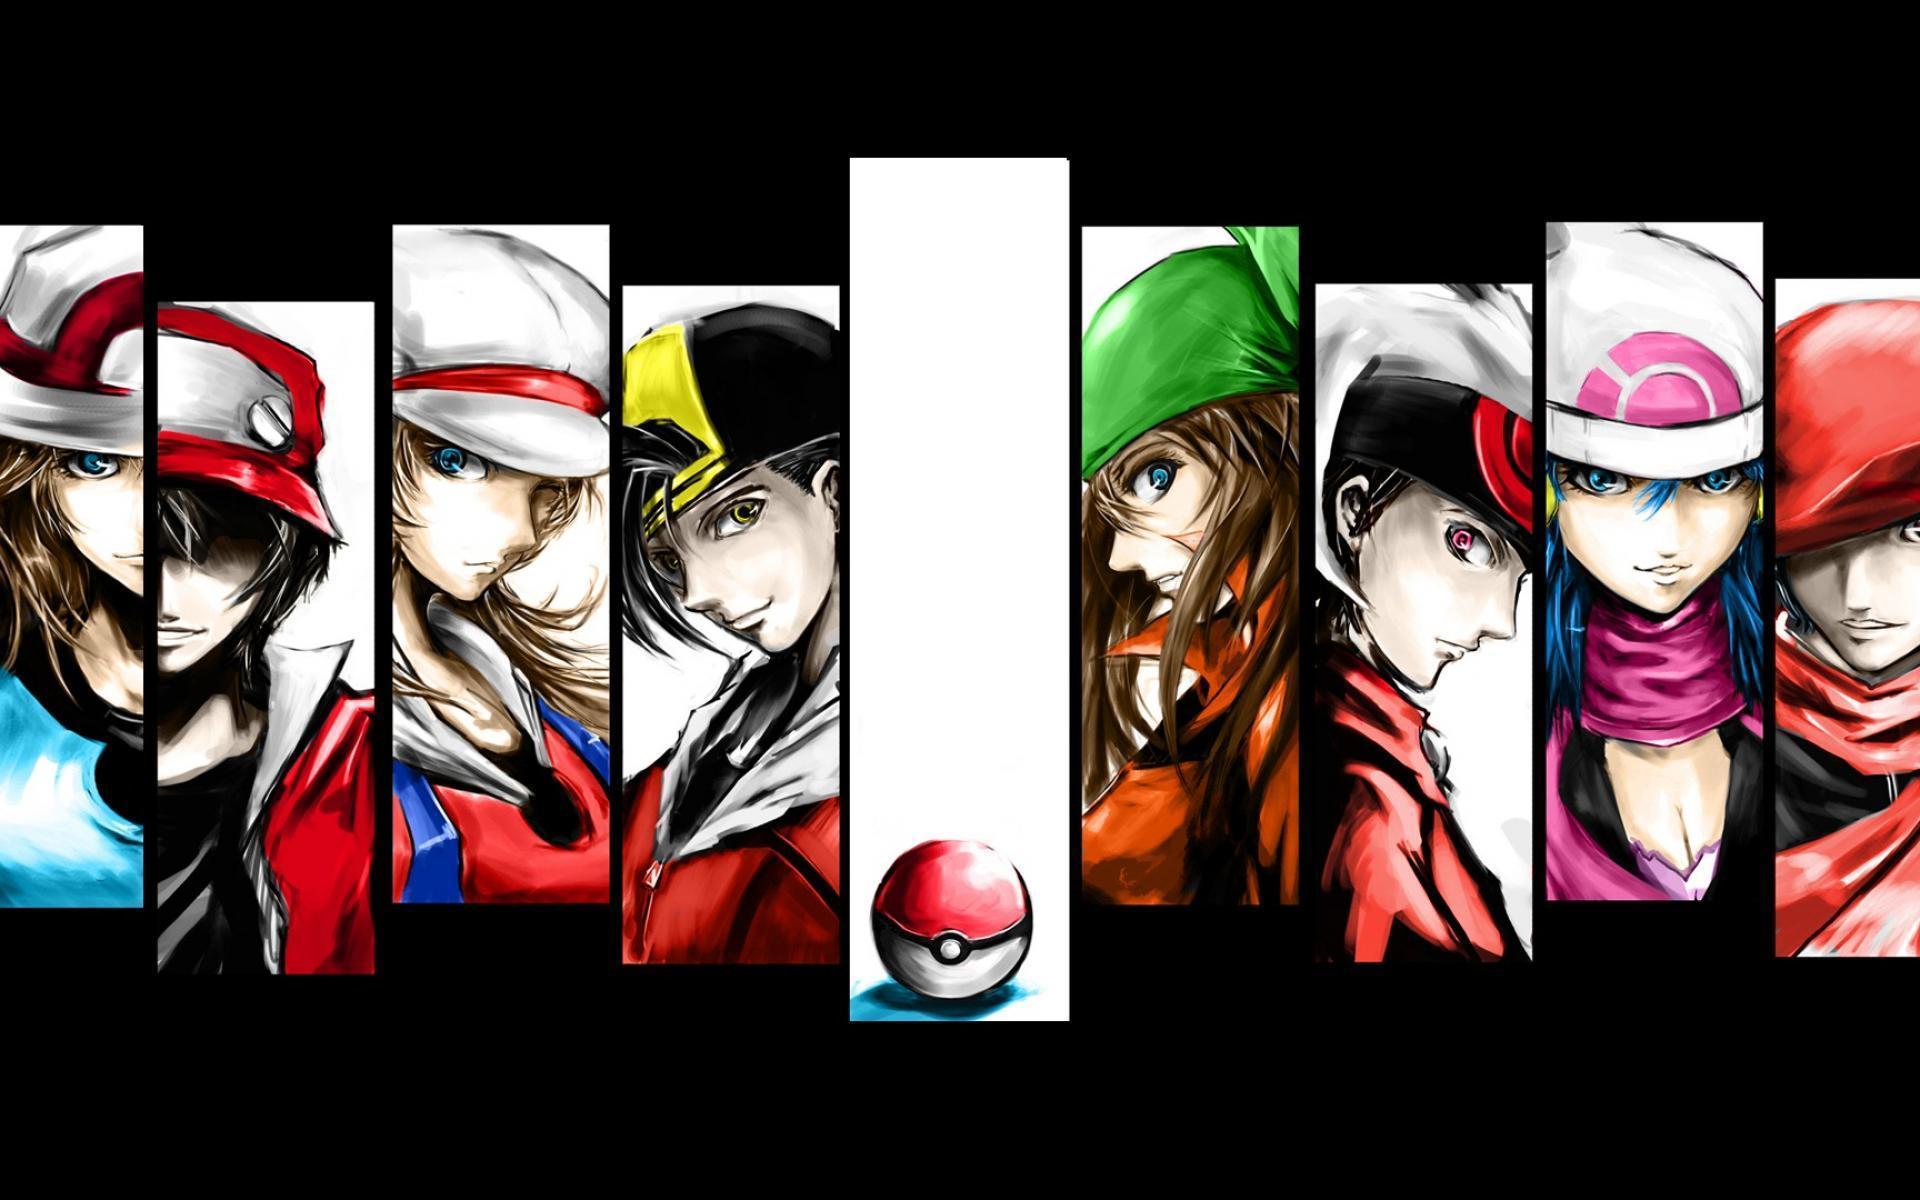 Pokémon Red & Green wallpapers for desktop, download free Pokémon